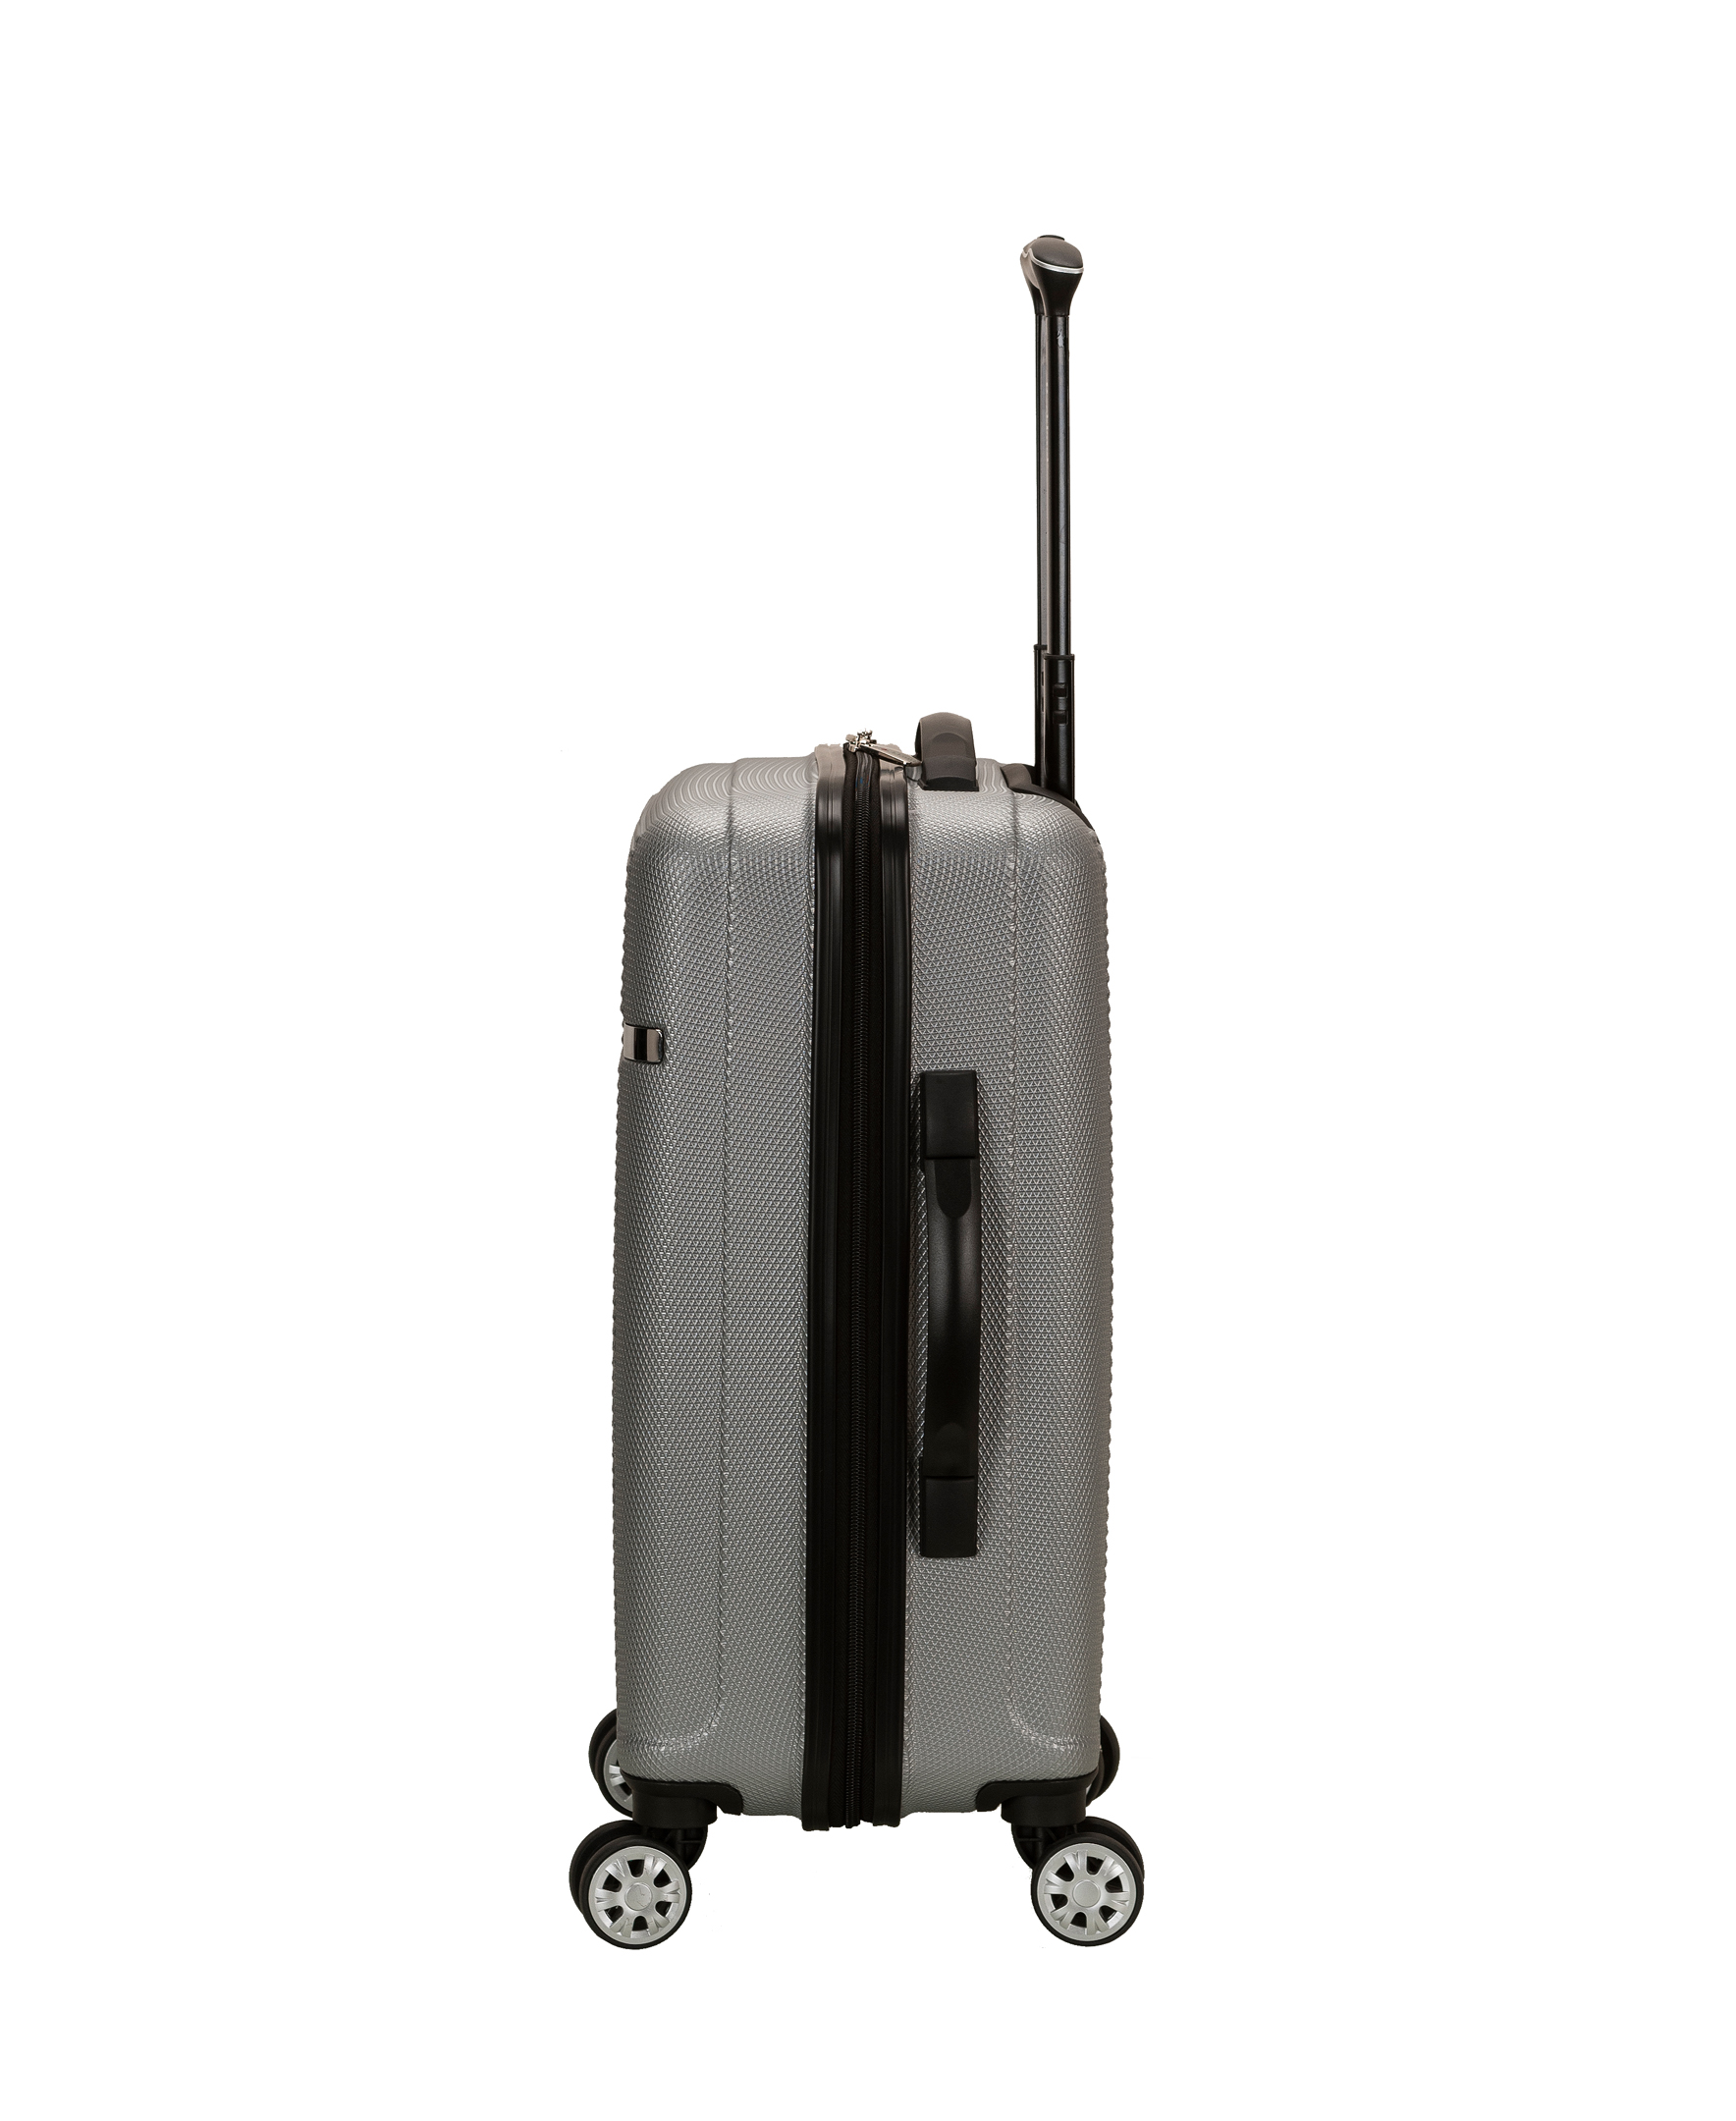 Rockland Luggage Skyline 3 Piece Hardside ABS Non-Expandable Luggage Set, F240 - image 5 of 8